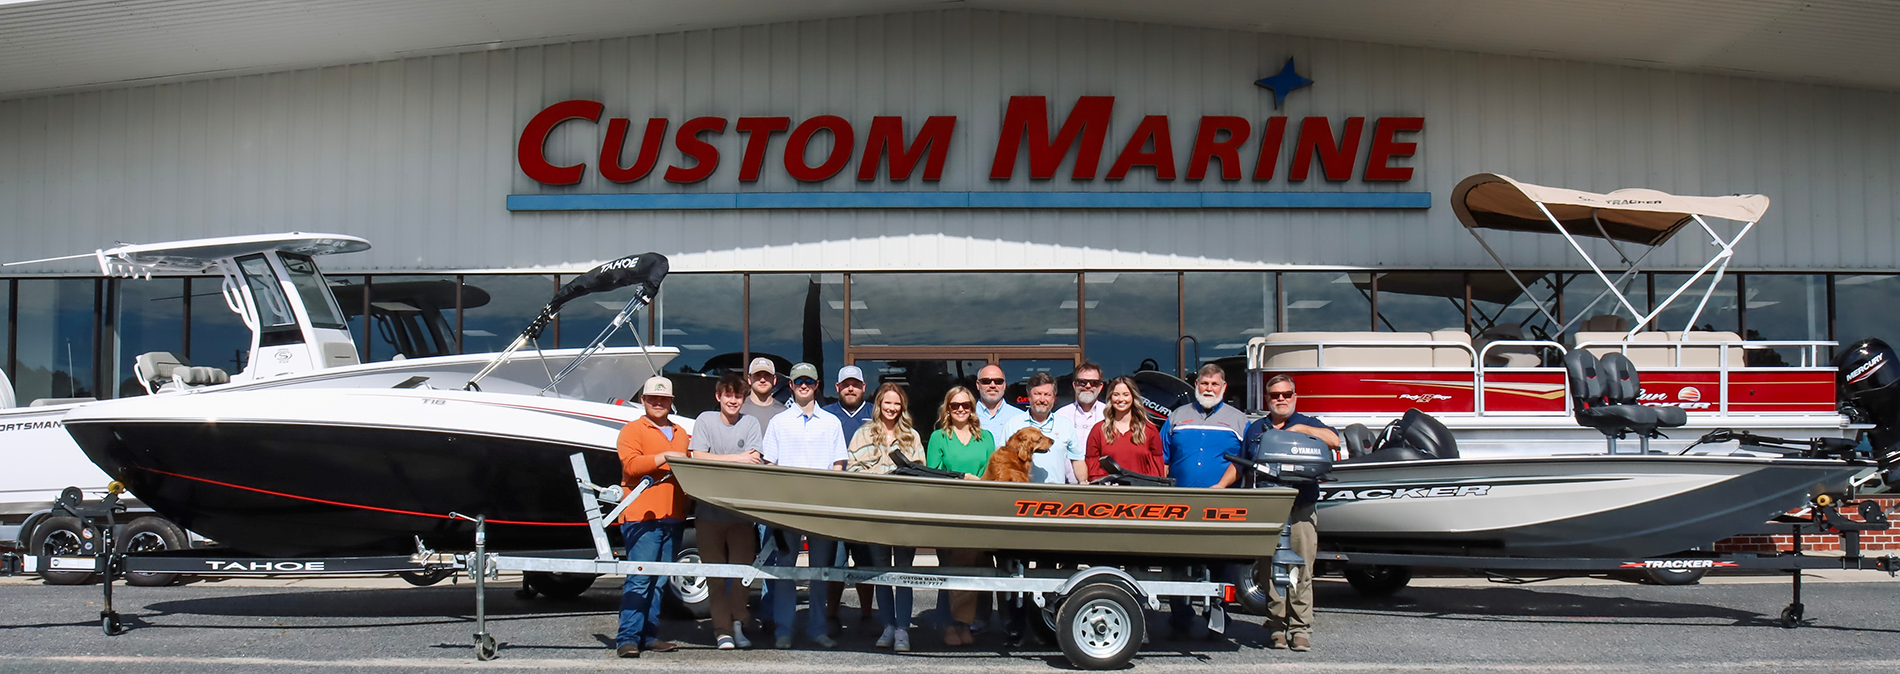 custom marine team | Custom Marine | Boats for Sale | Boat Dealer | Boat Service